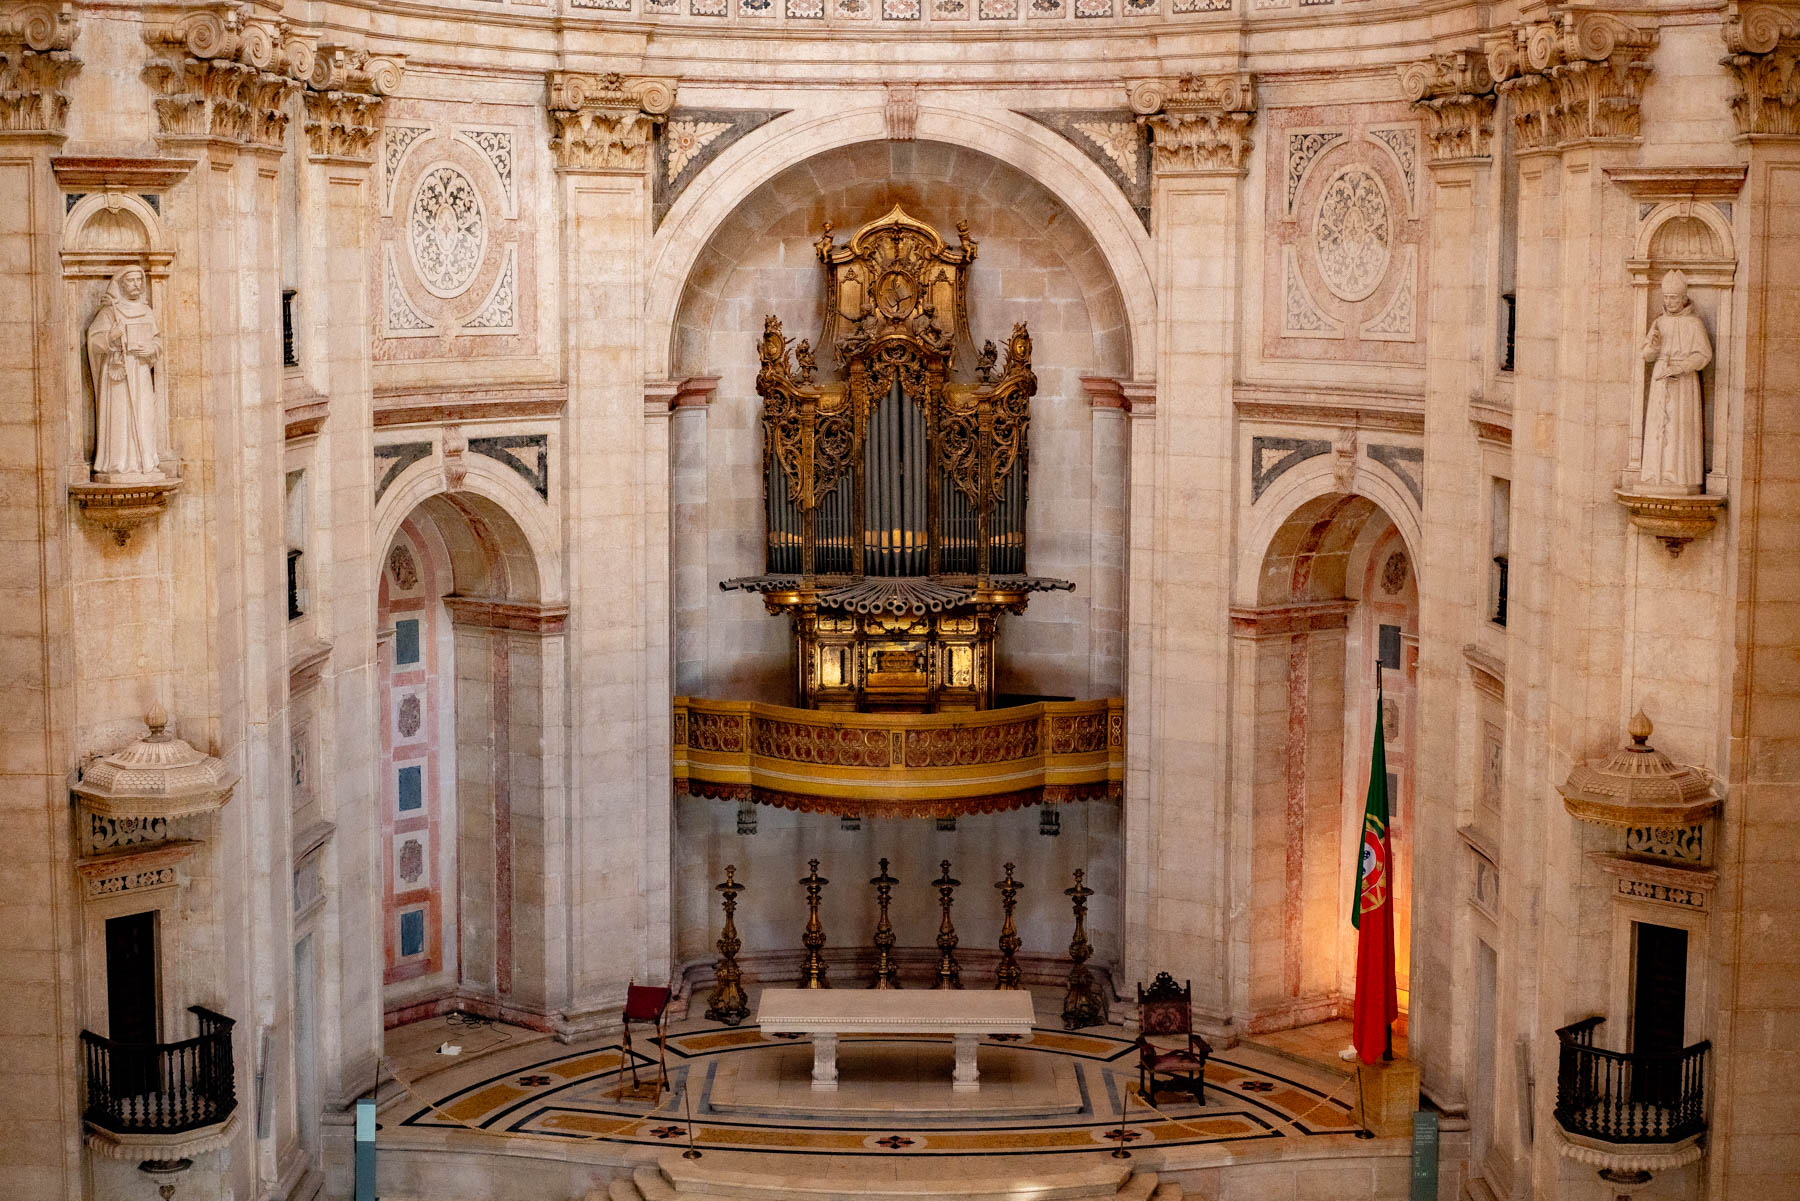 inside the National Pantheon in Lisbon
Lisbon National Pantheon 